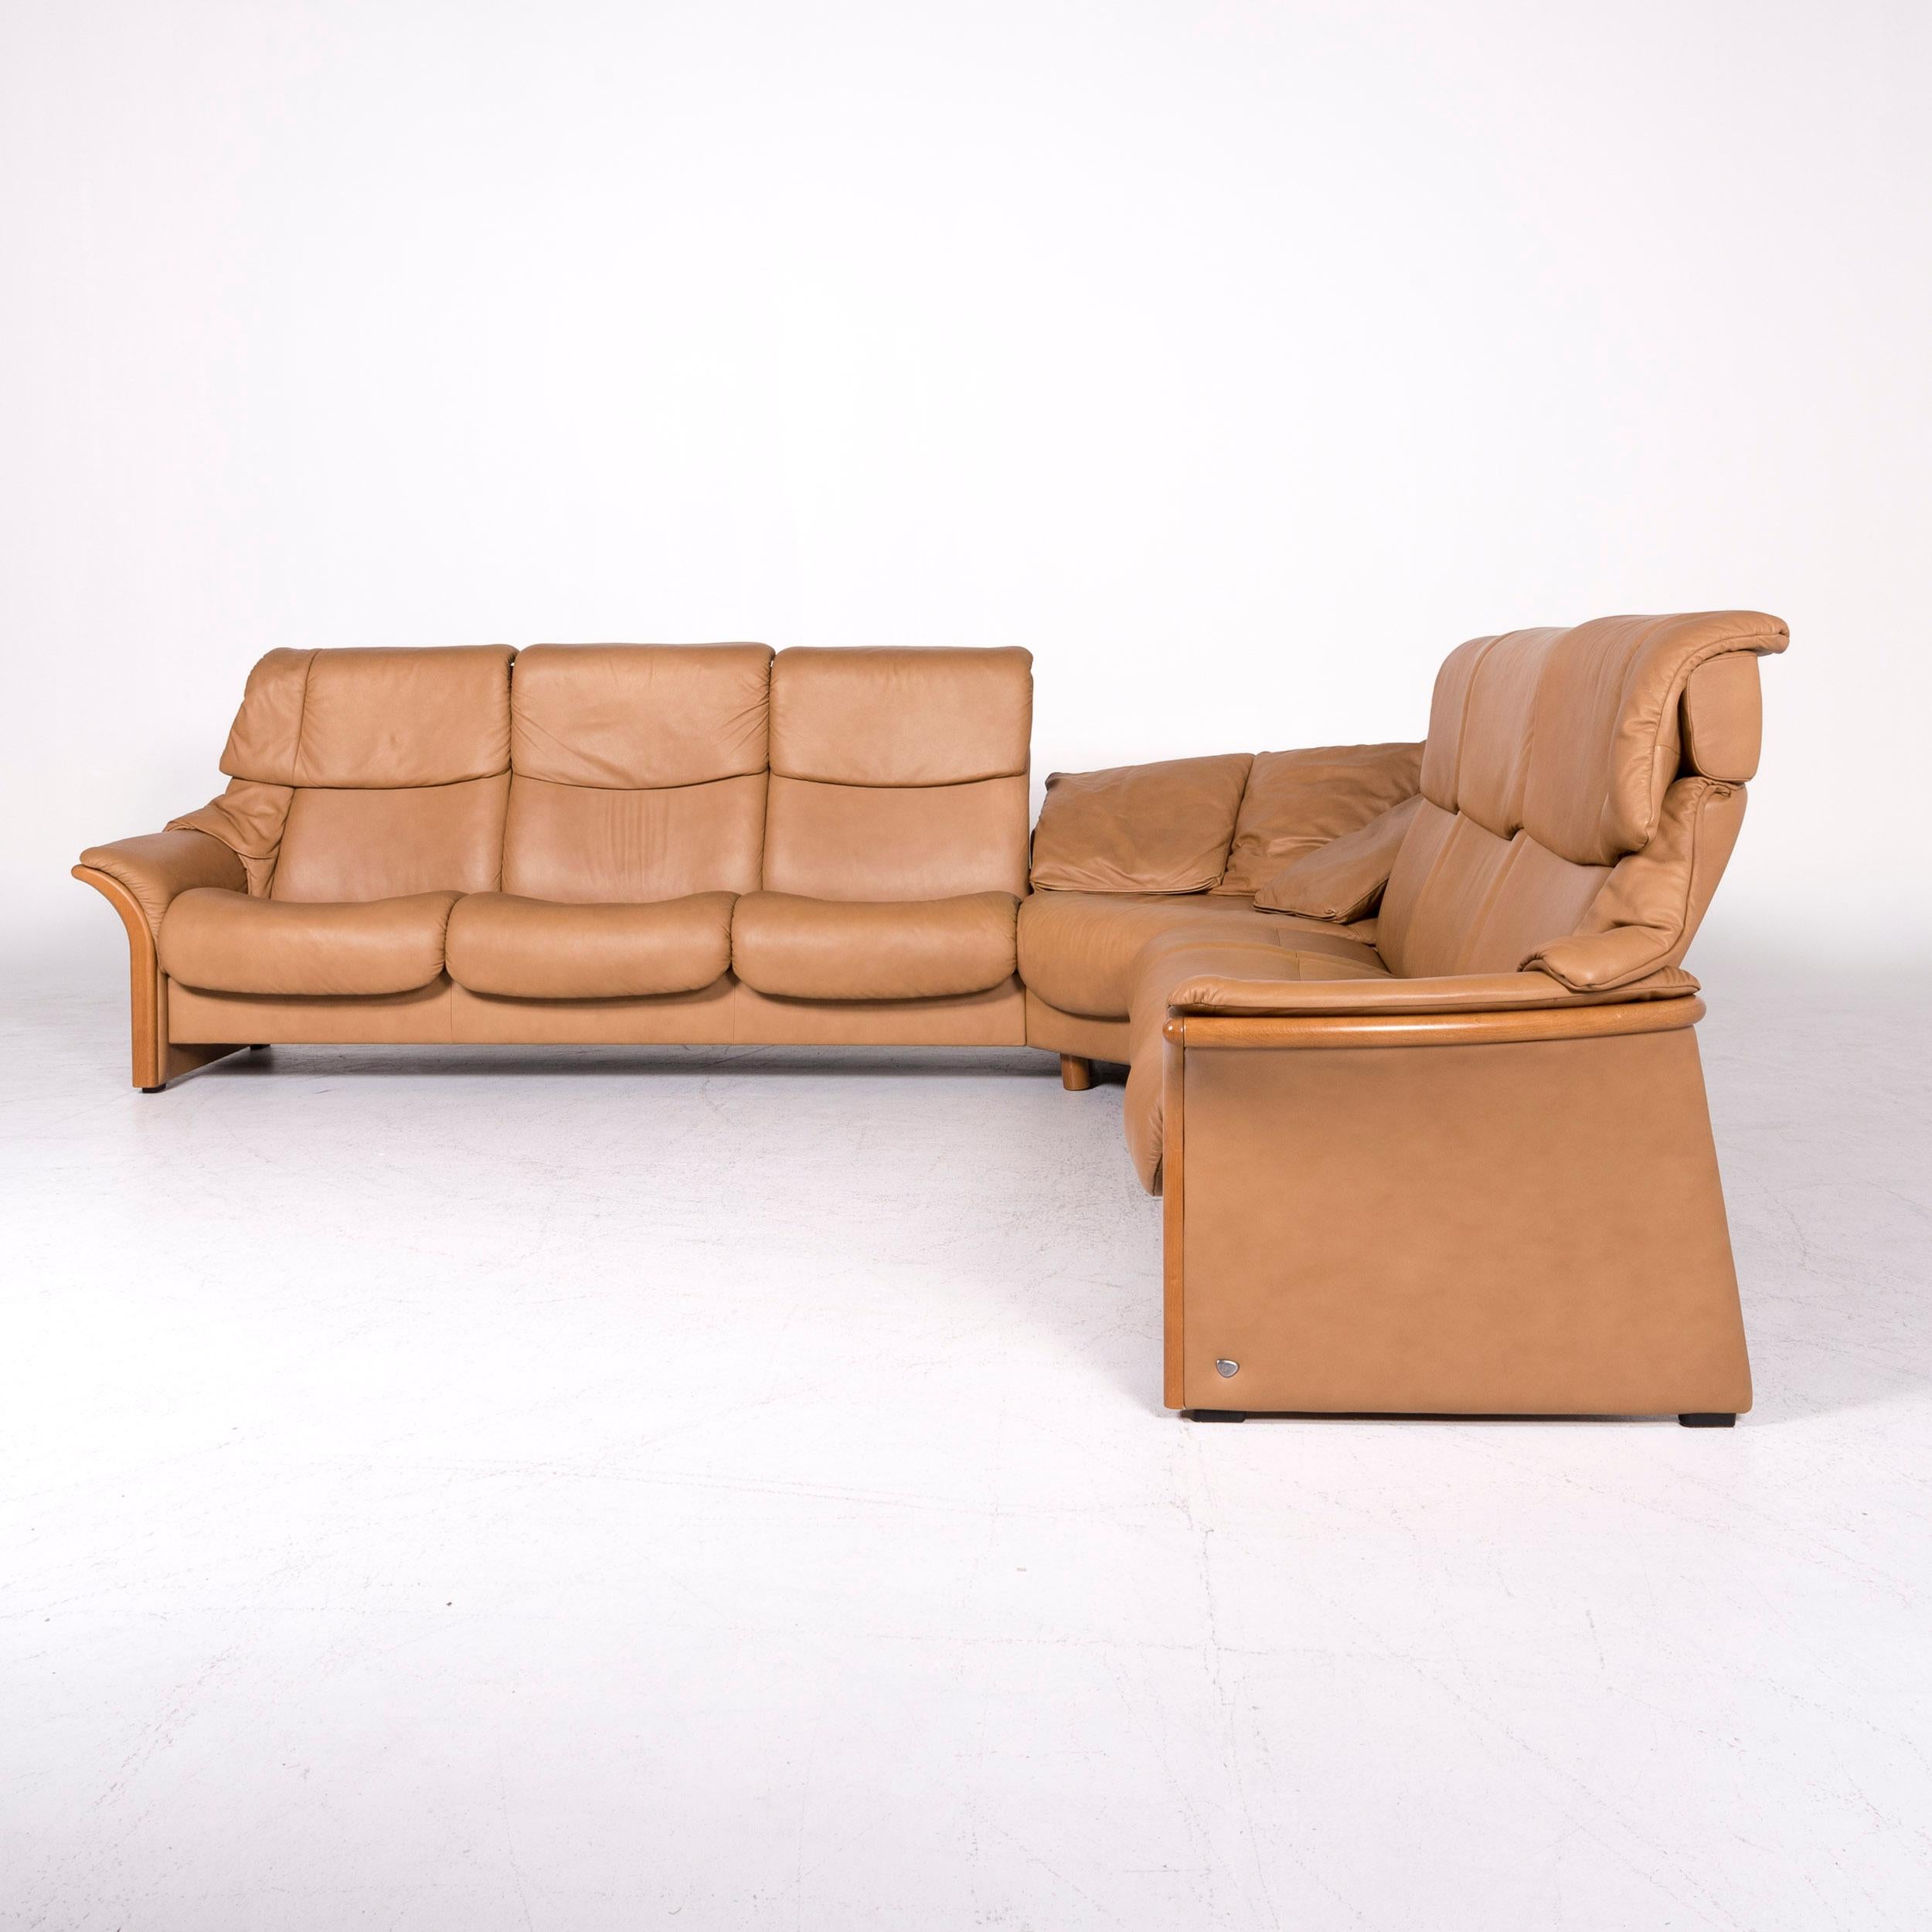 Stressless Eldorado Designer Leather Corner Sofa Beige Real Leather Sofa Couch 4